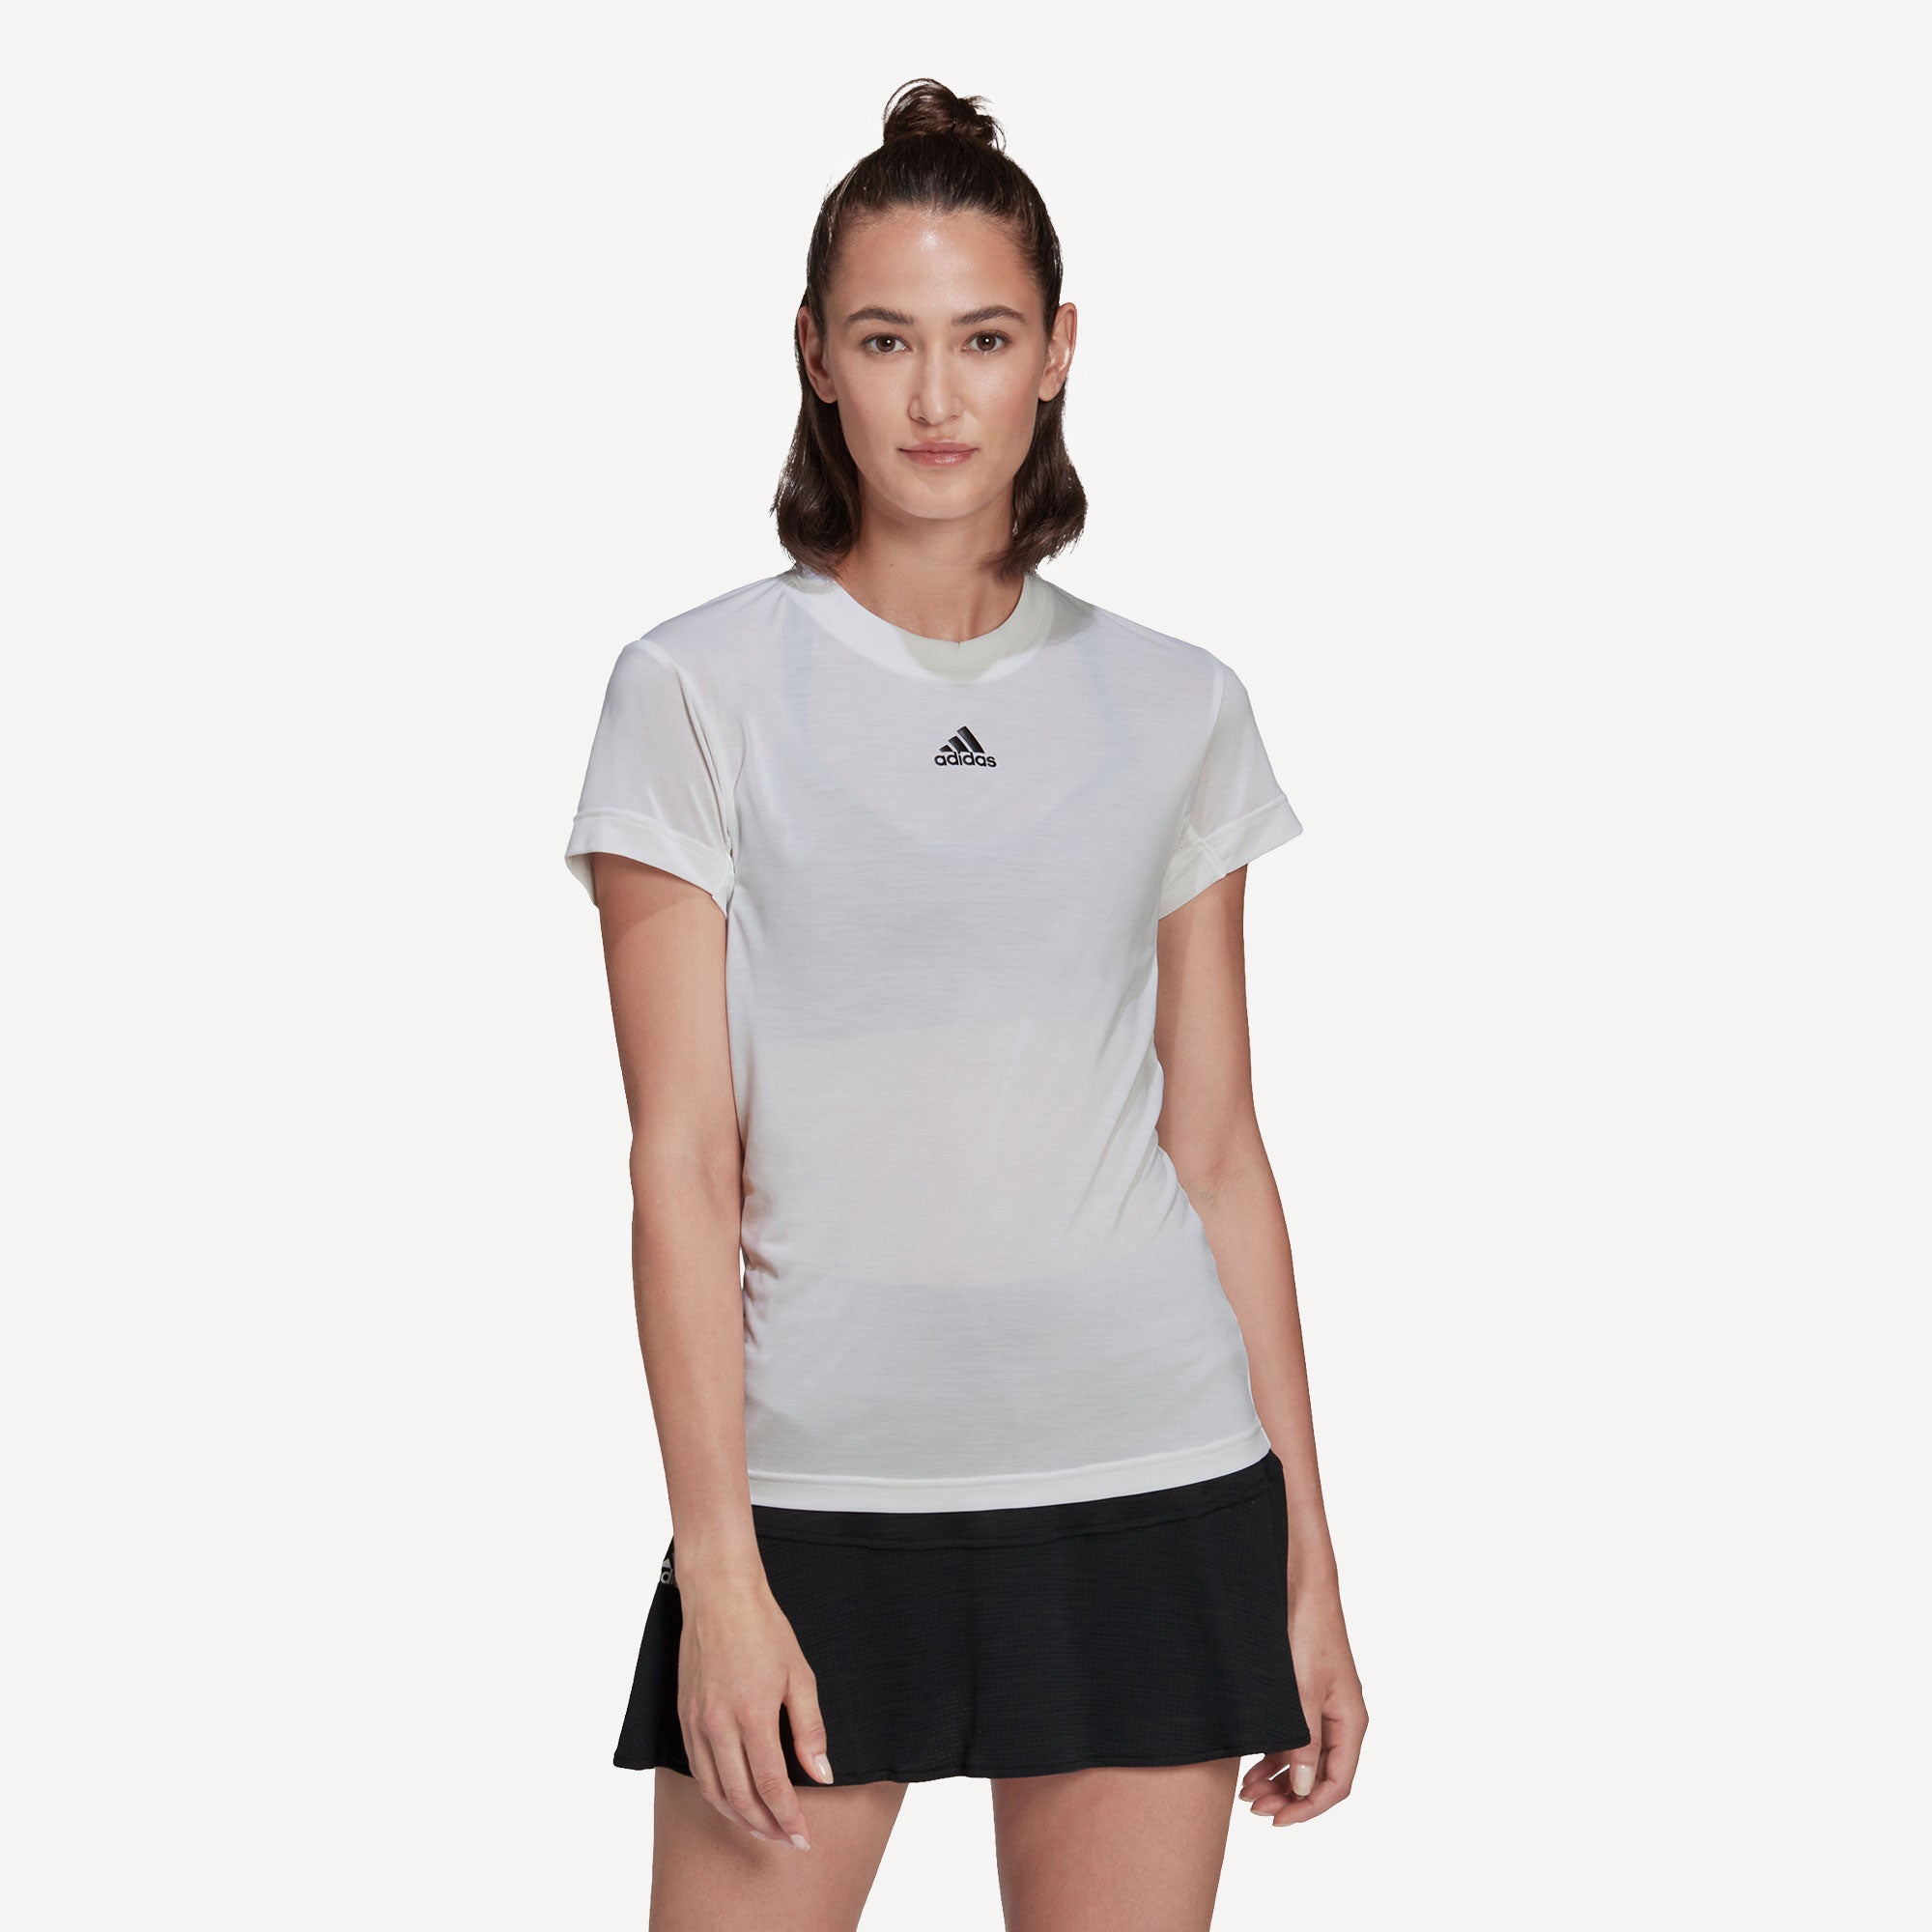 adidas Match Women's Tennis Shirt White (1)